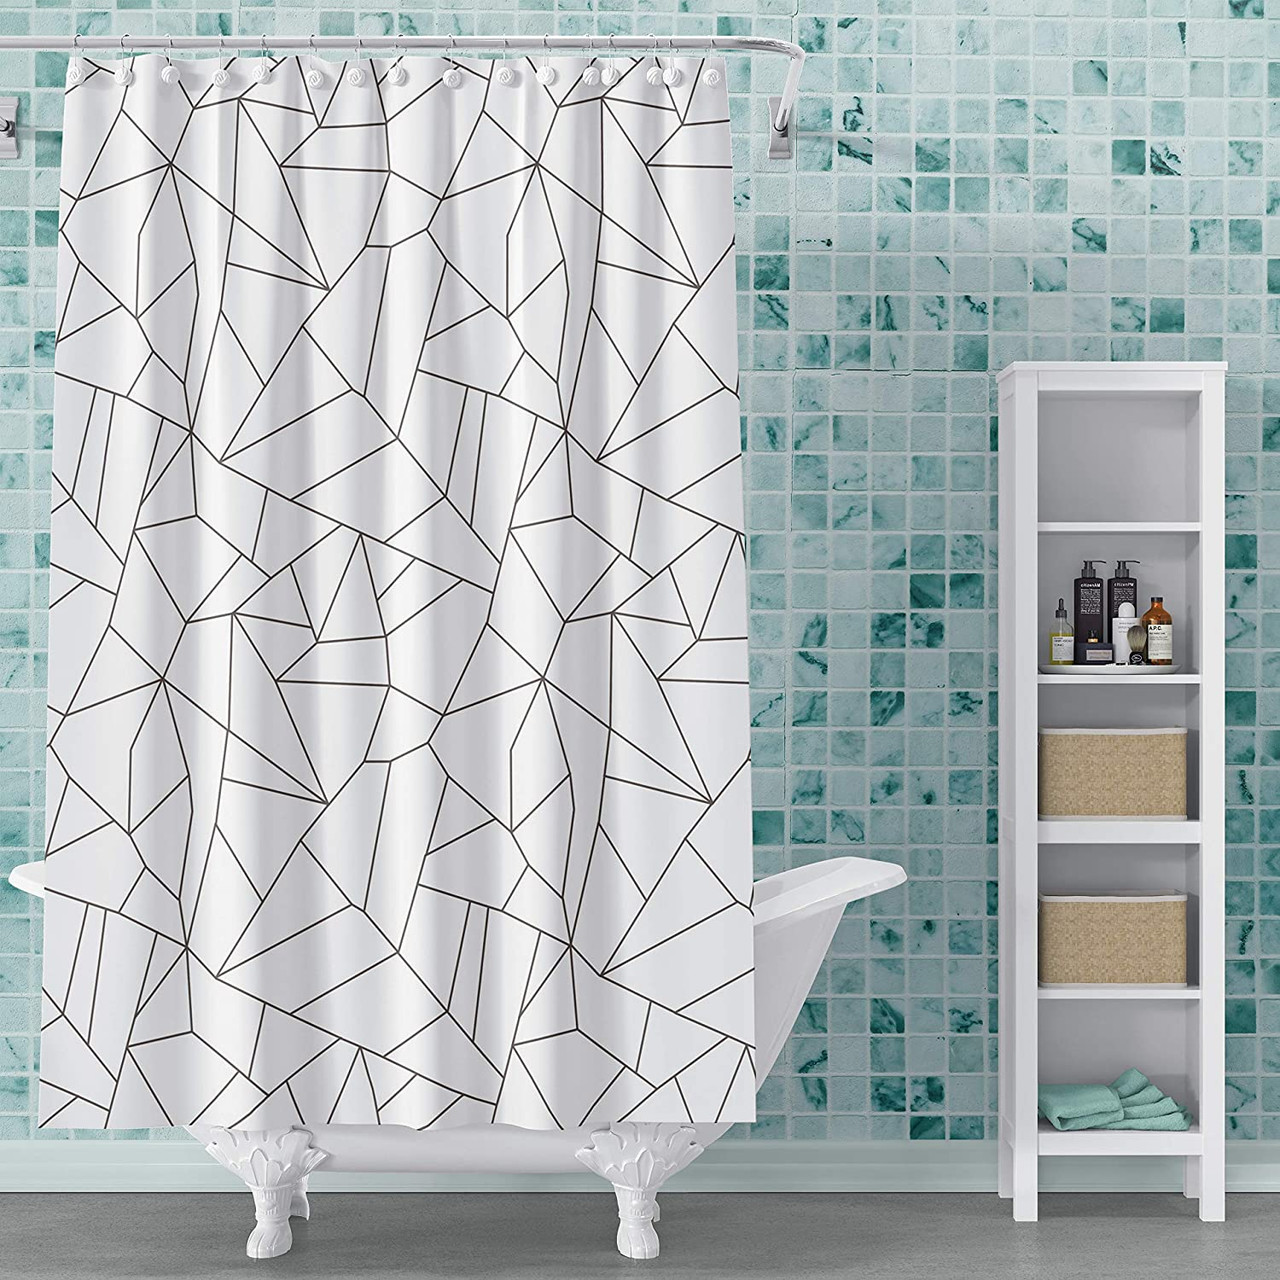 Bathroom Decor Modern PEVA Shower Curtain Beautiful Printed Design 72x72